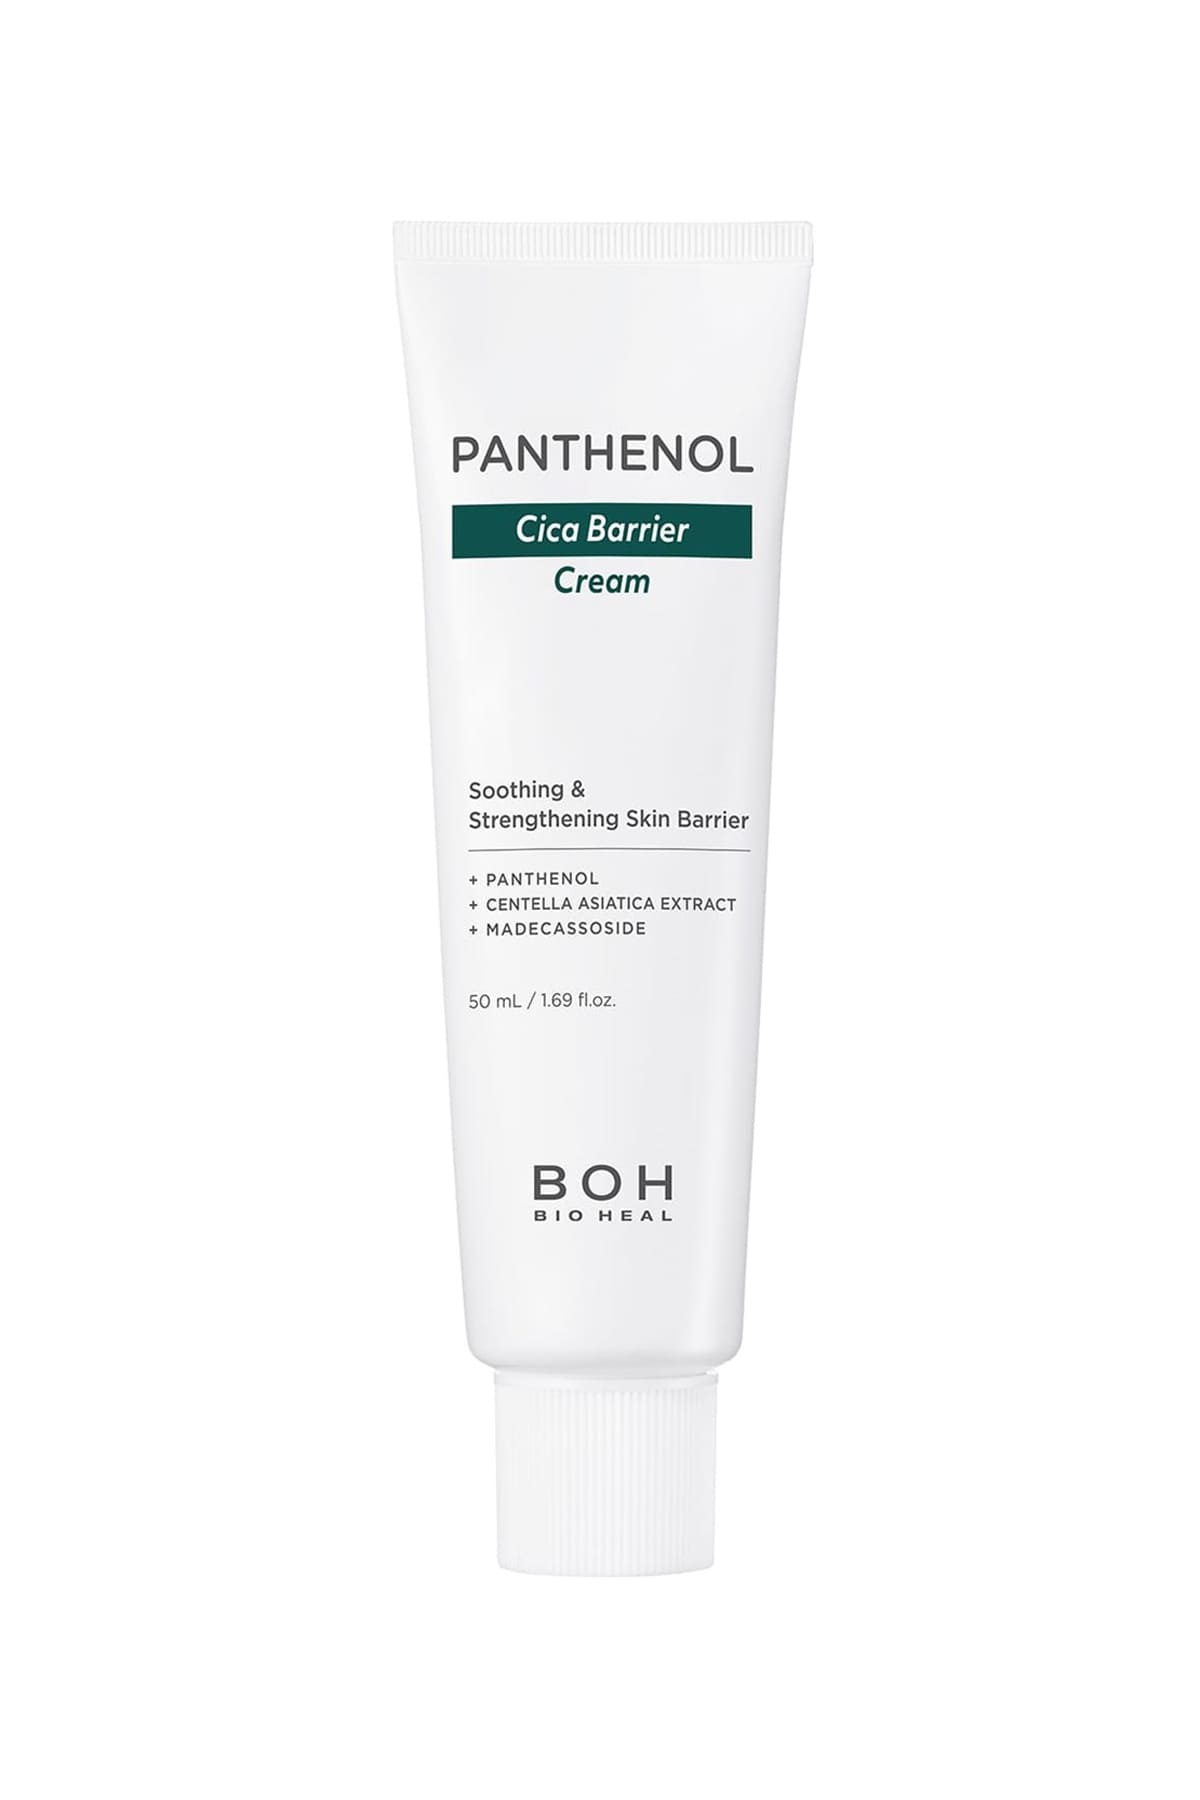 Bioheal BOH Panthenol Cica Barrier Cream 50ml (KUTUSUZ)